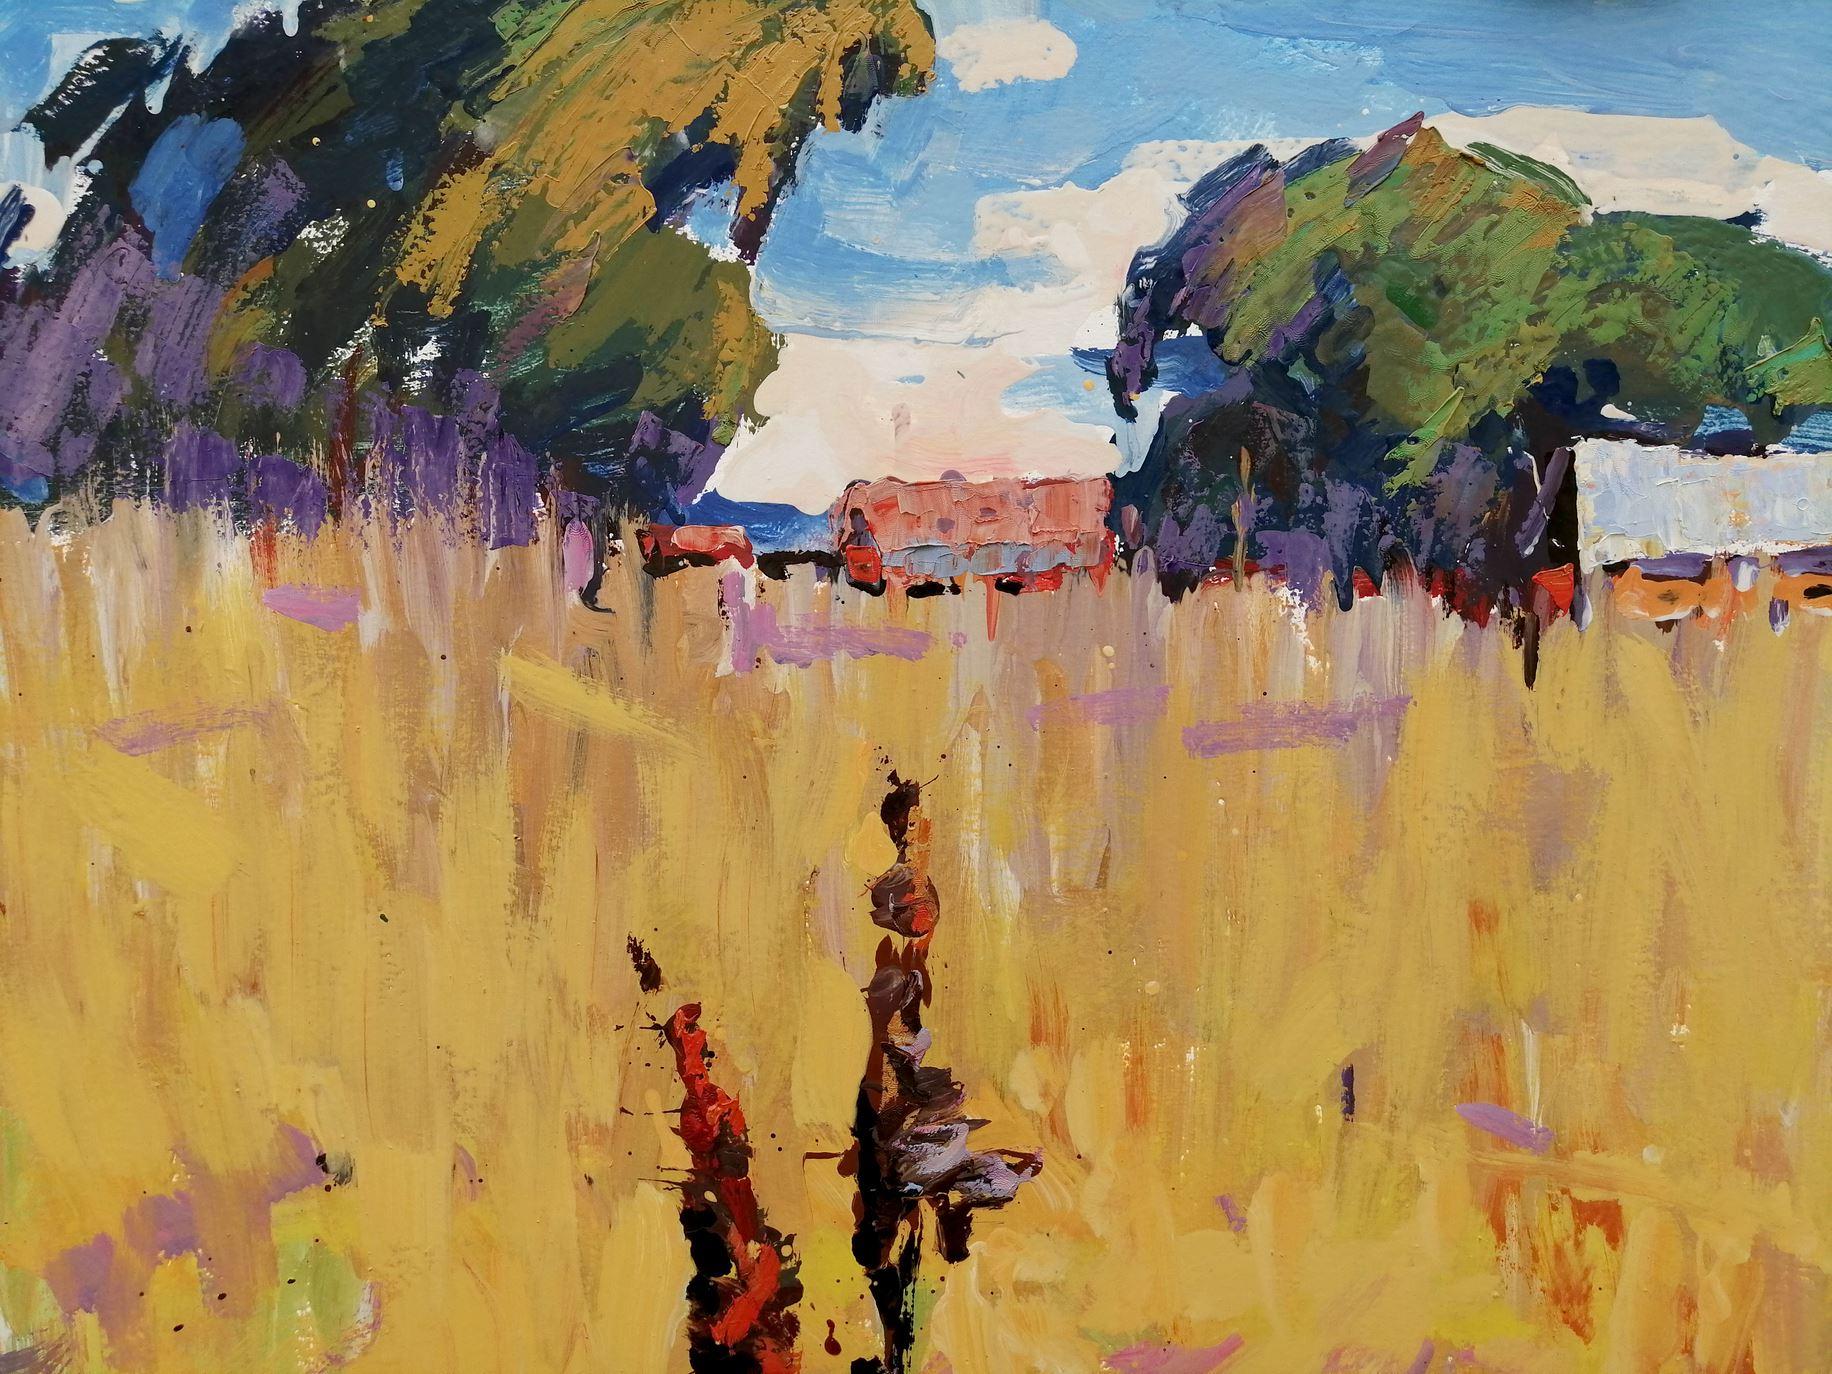 Artist: Alex Kalenyuk 
Work: Original oil painting, handmade artwork, one of a kind 
Medium: Oil on canvas 
Year: 2018
Style: Impressionism
Title: Rural Landscape,
Size: 39